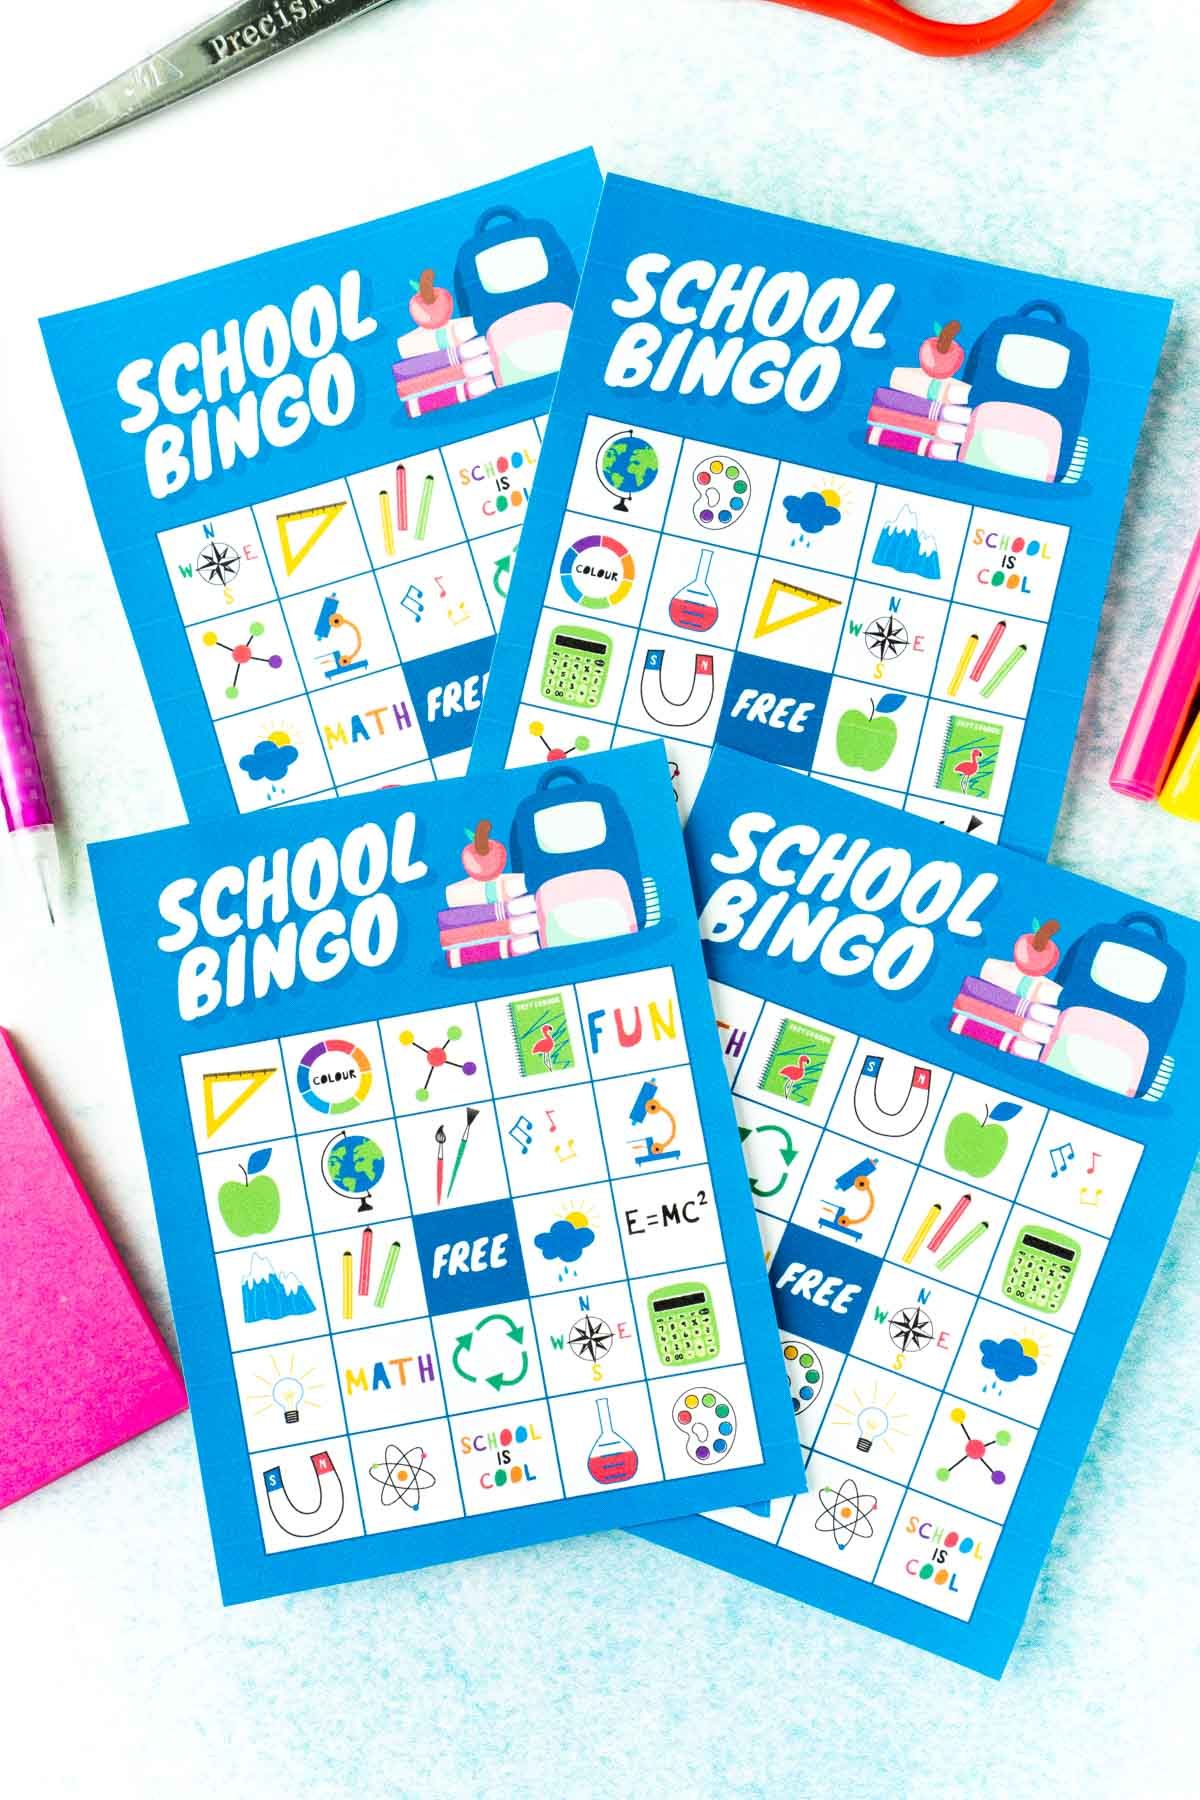 Empat kad bingo biru ke sekolah dengan gambar sekolah di atasnya